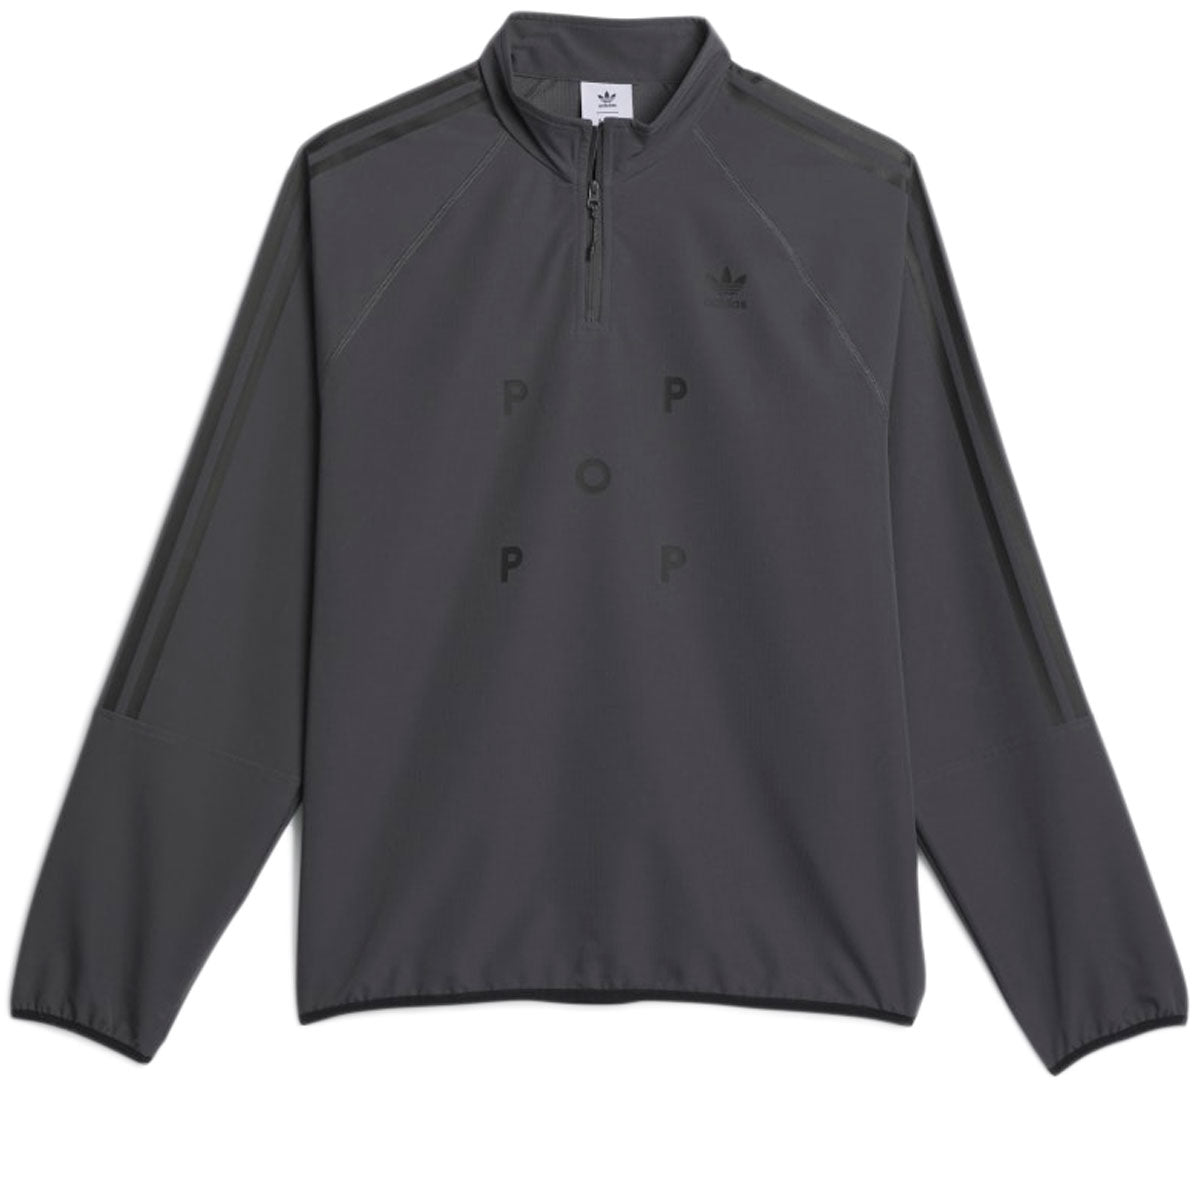 Adidas x Pop Thermal Long Sleeve Shirt - Grey/Black image 4